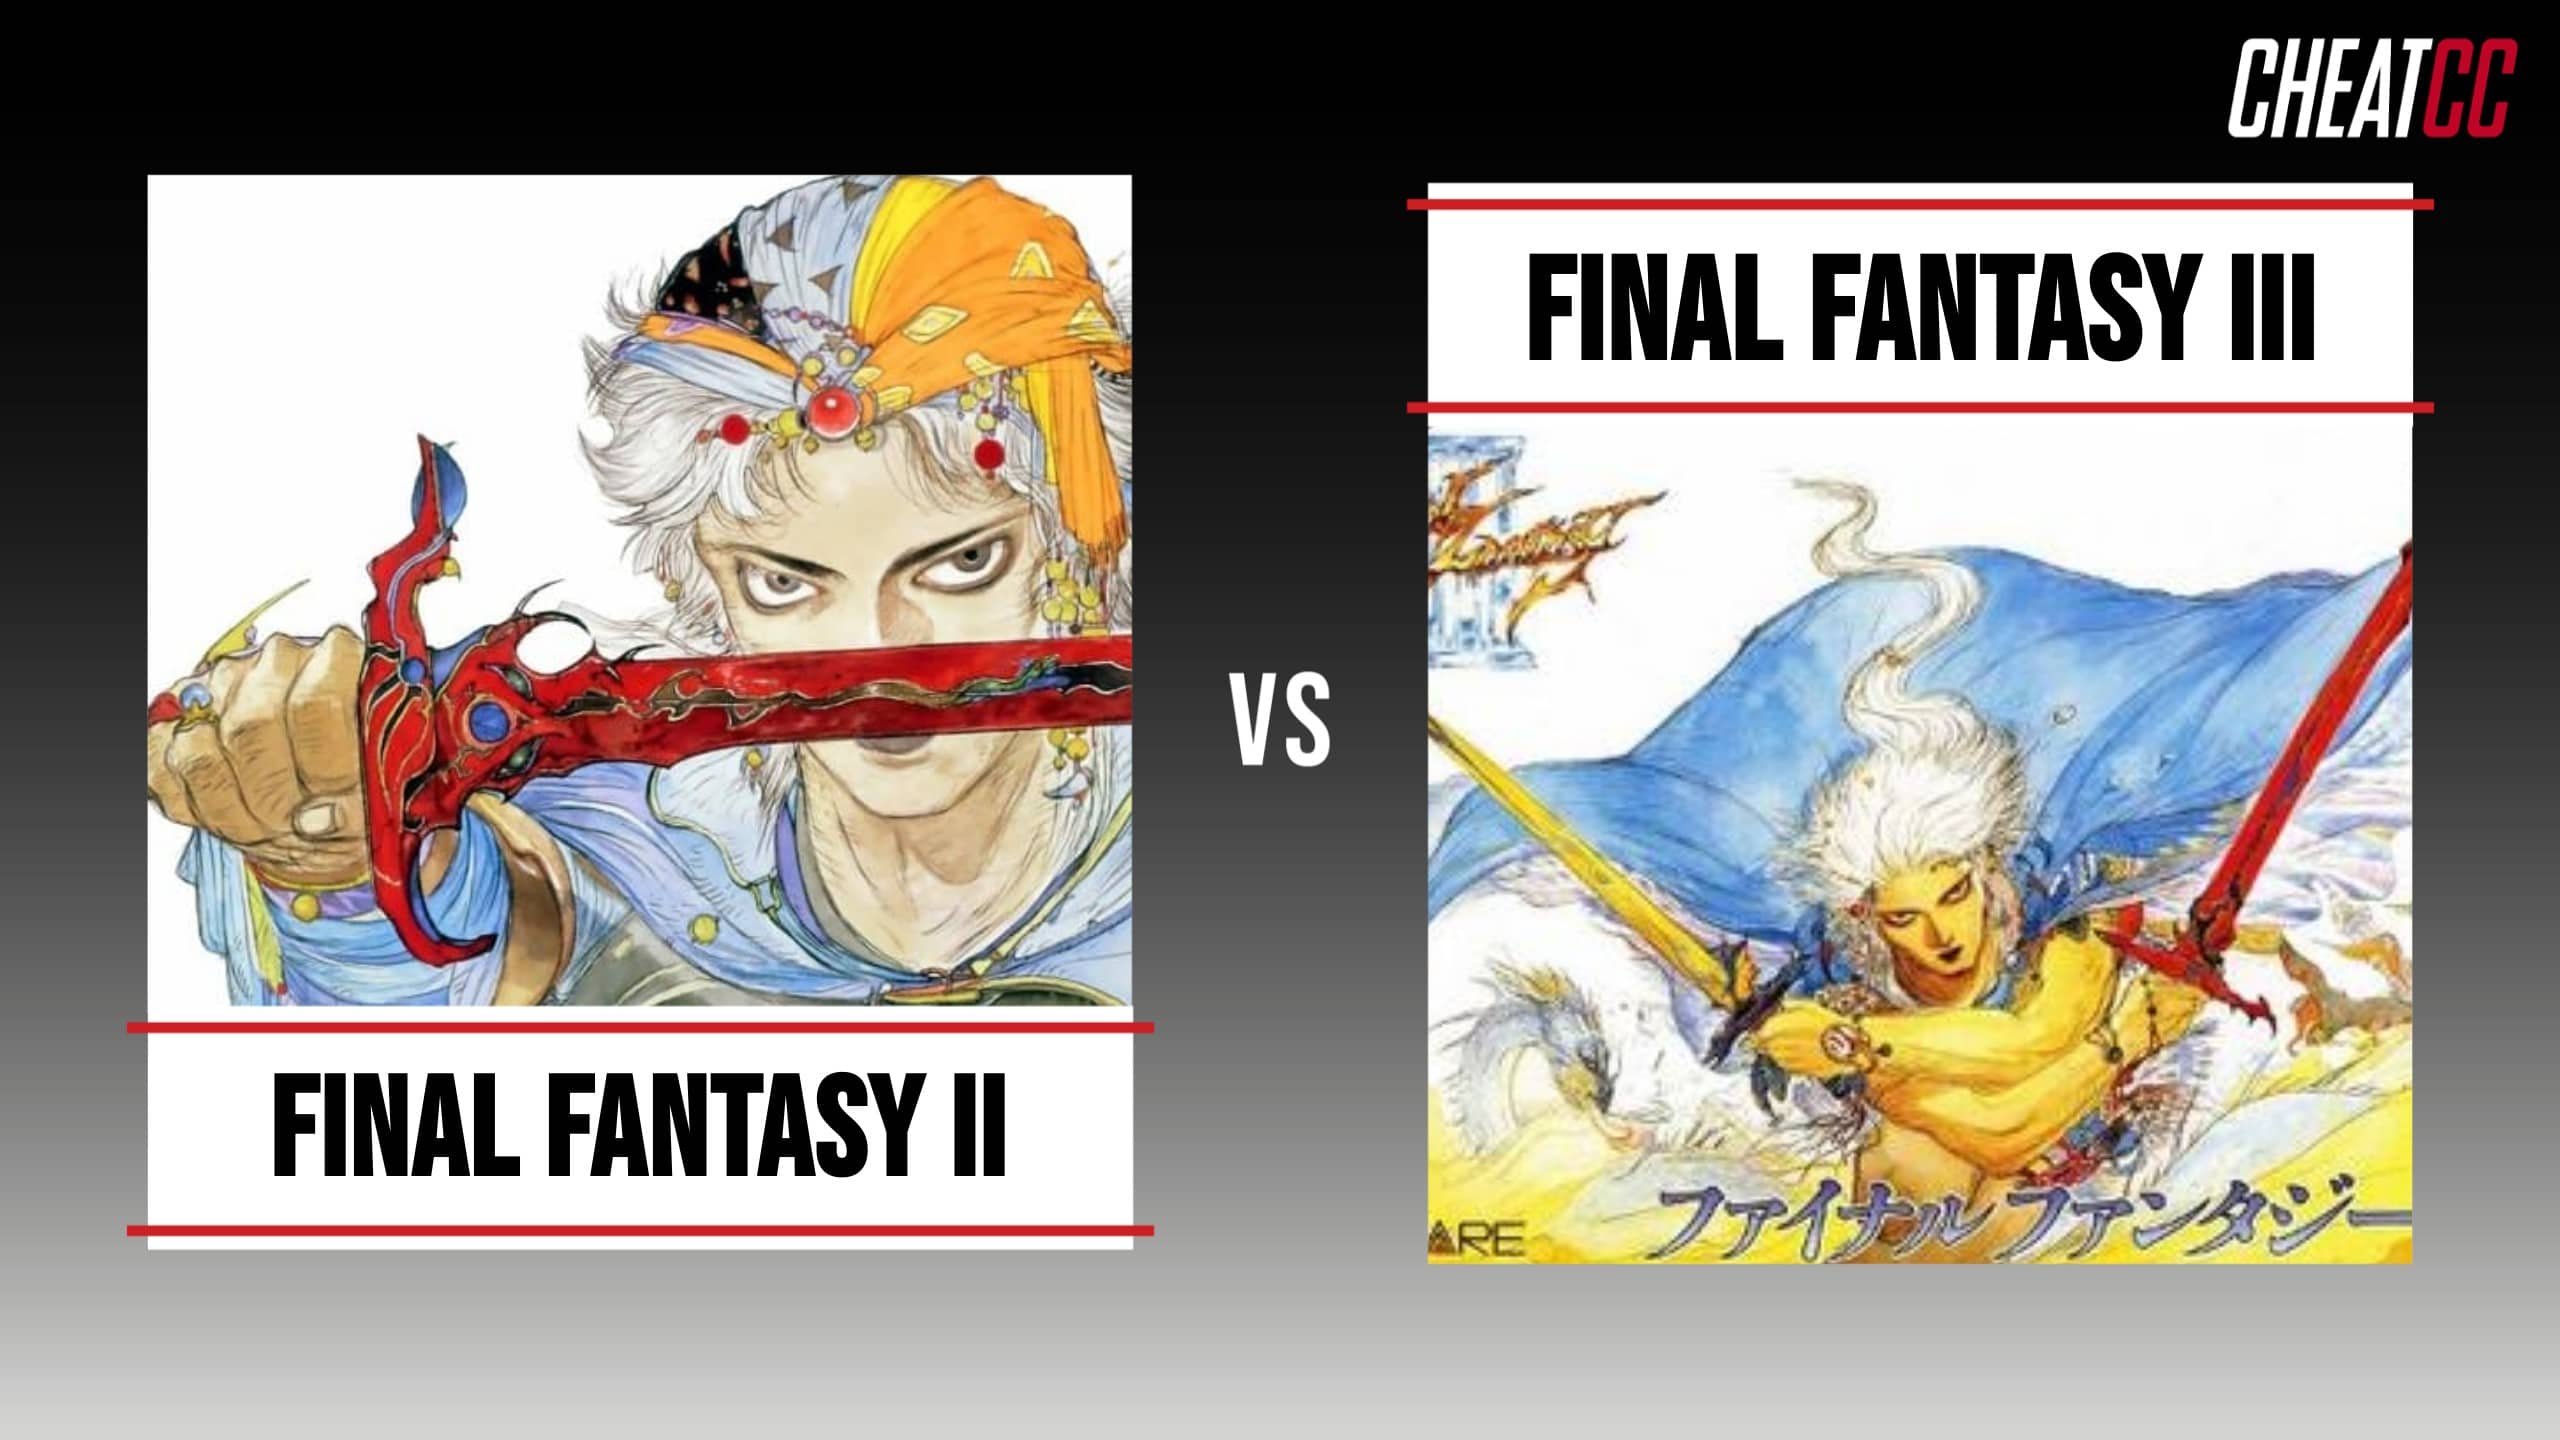 Final Fantasy II vs Final Fantasy III